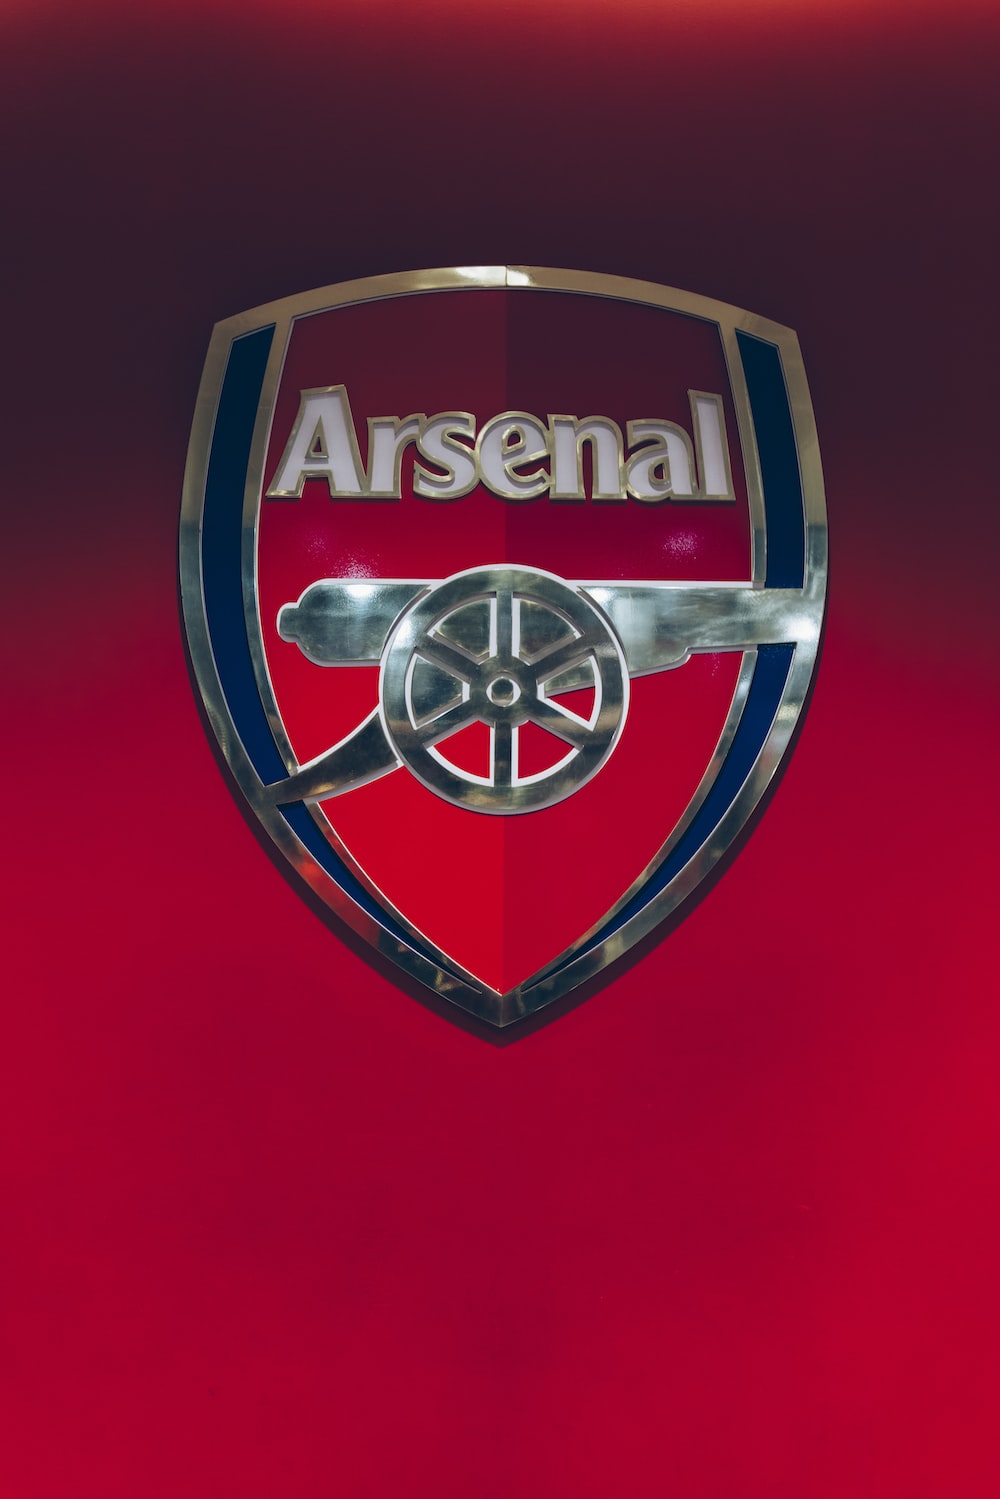 Arsenal Logo Picture. Download Free Image